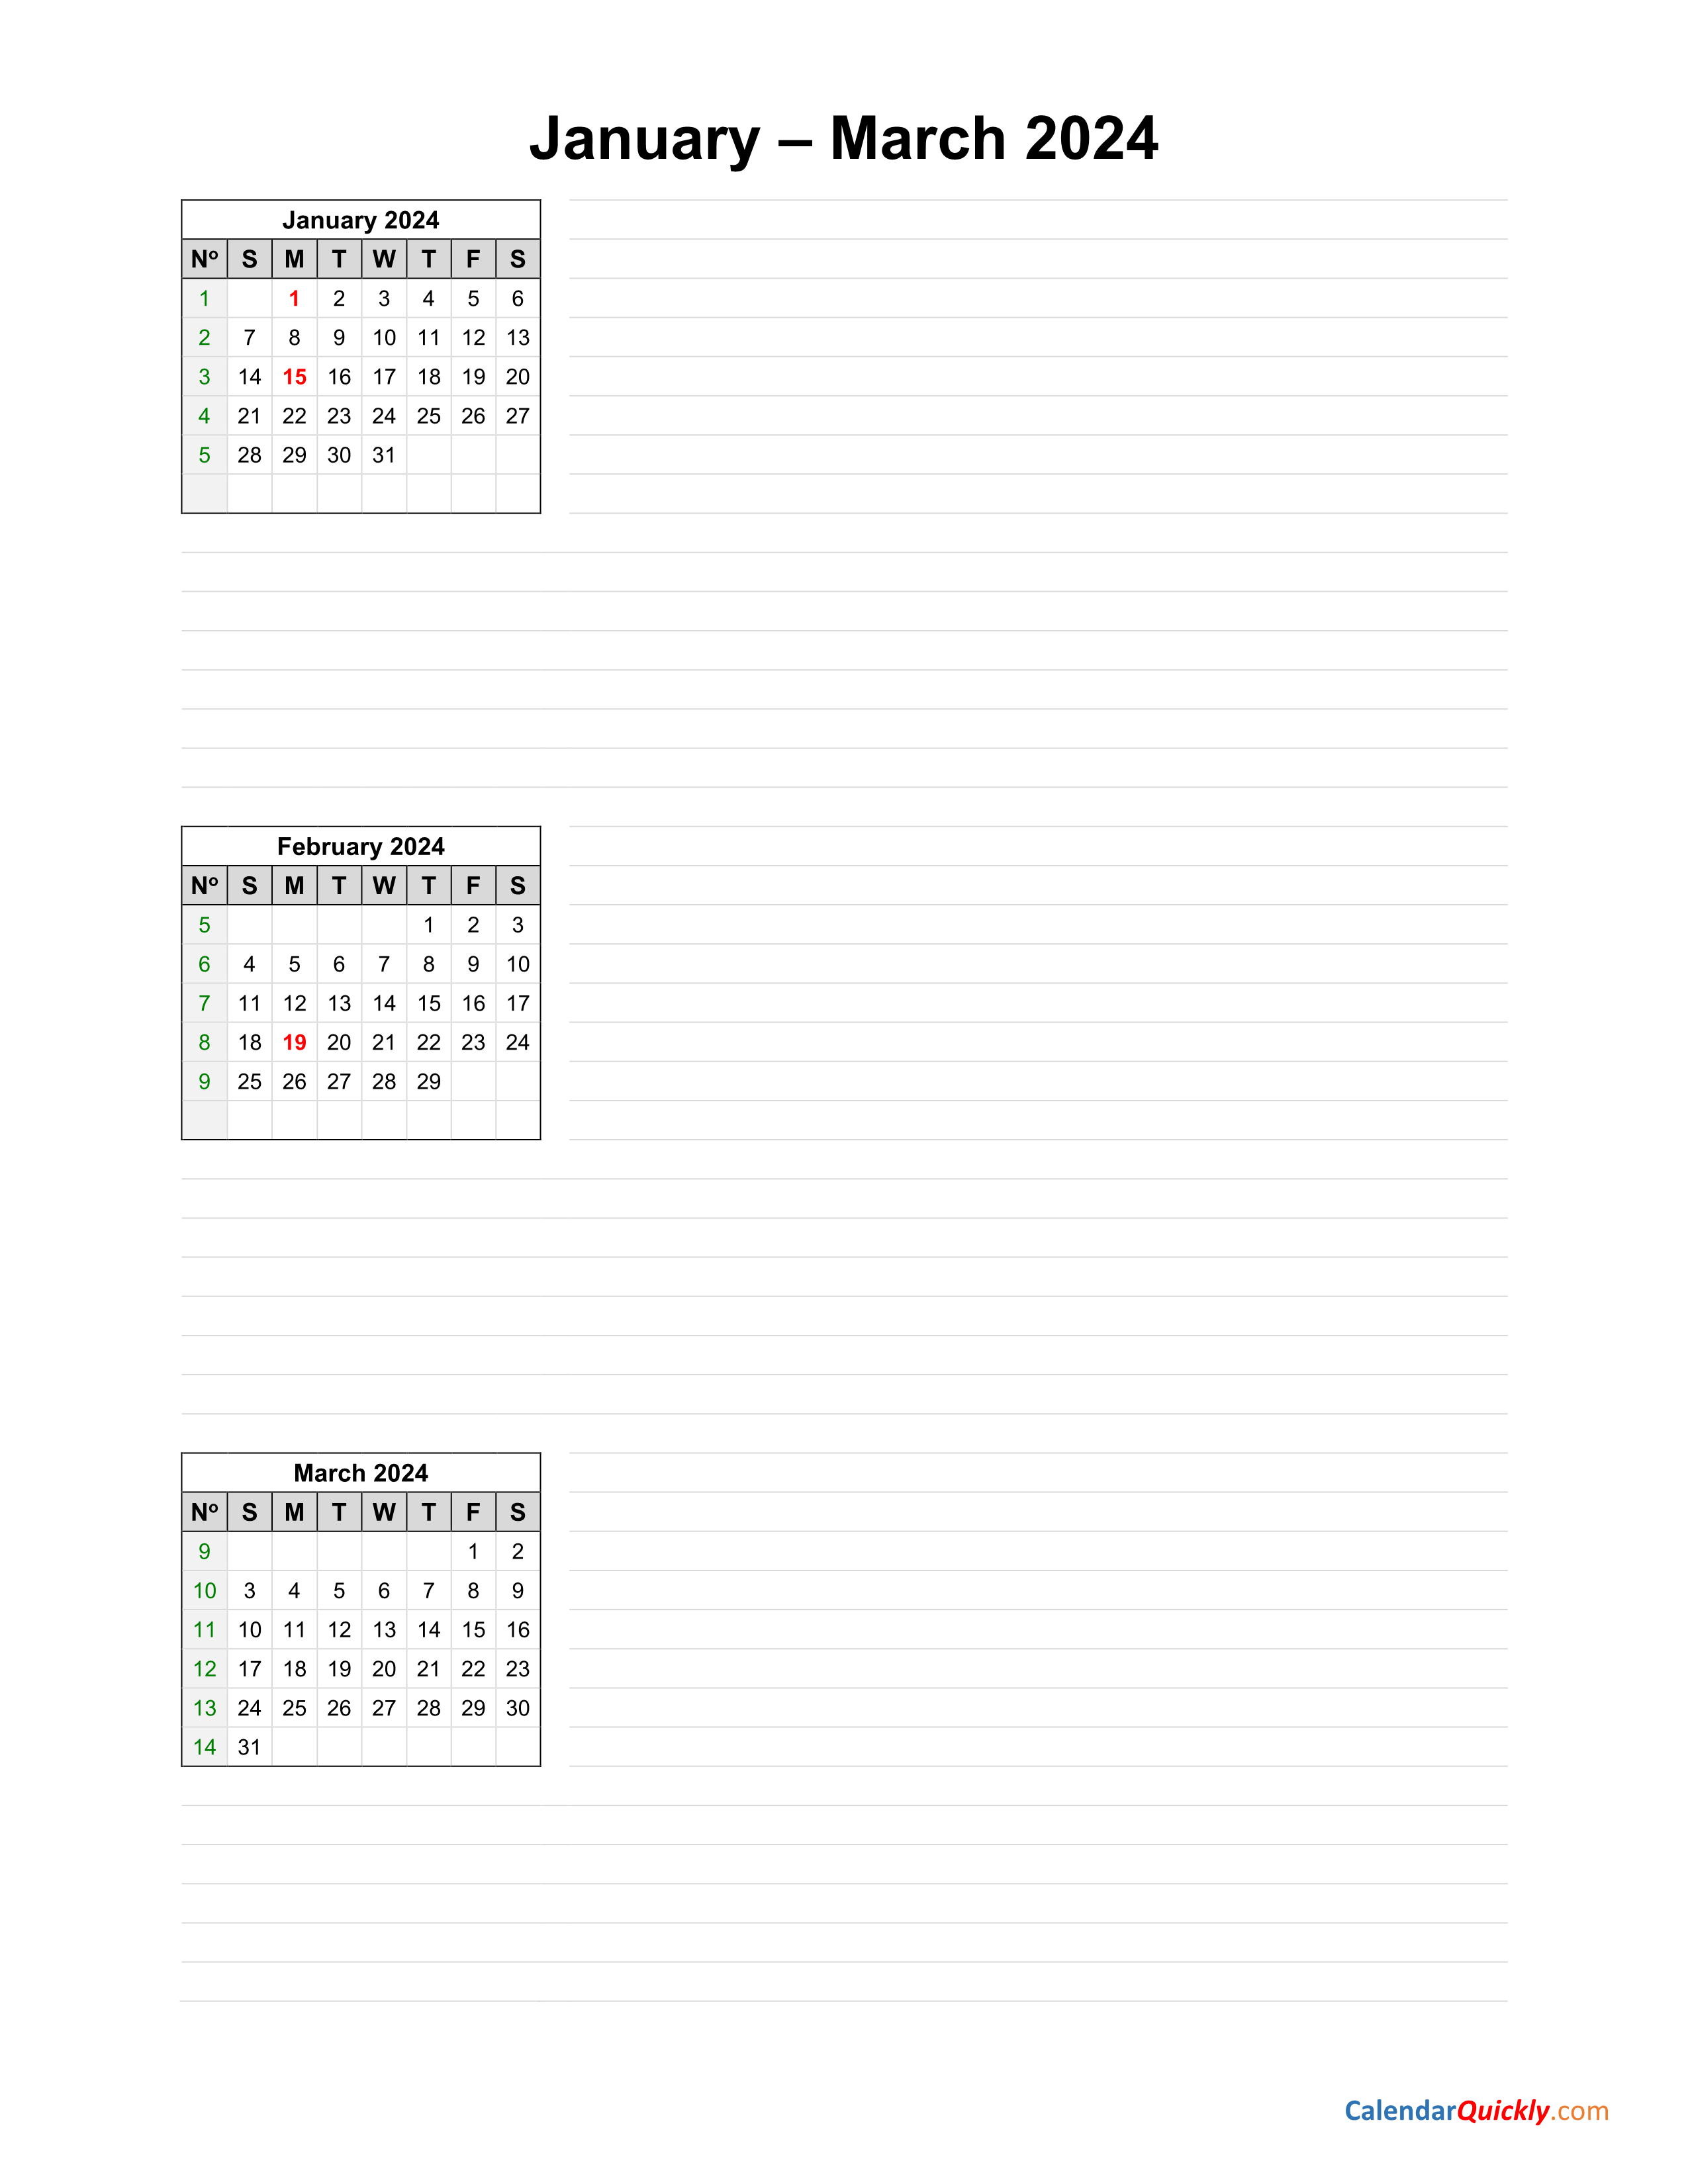 2024 Calendar January To March 2024 Miran Tammara